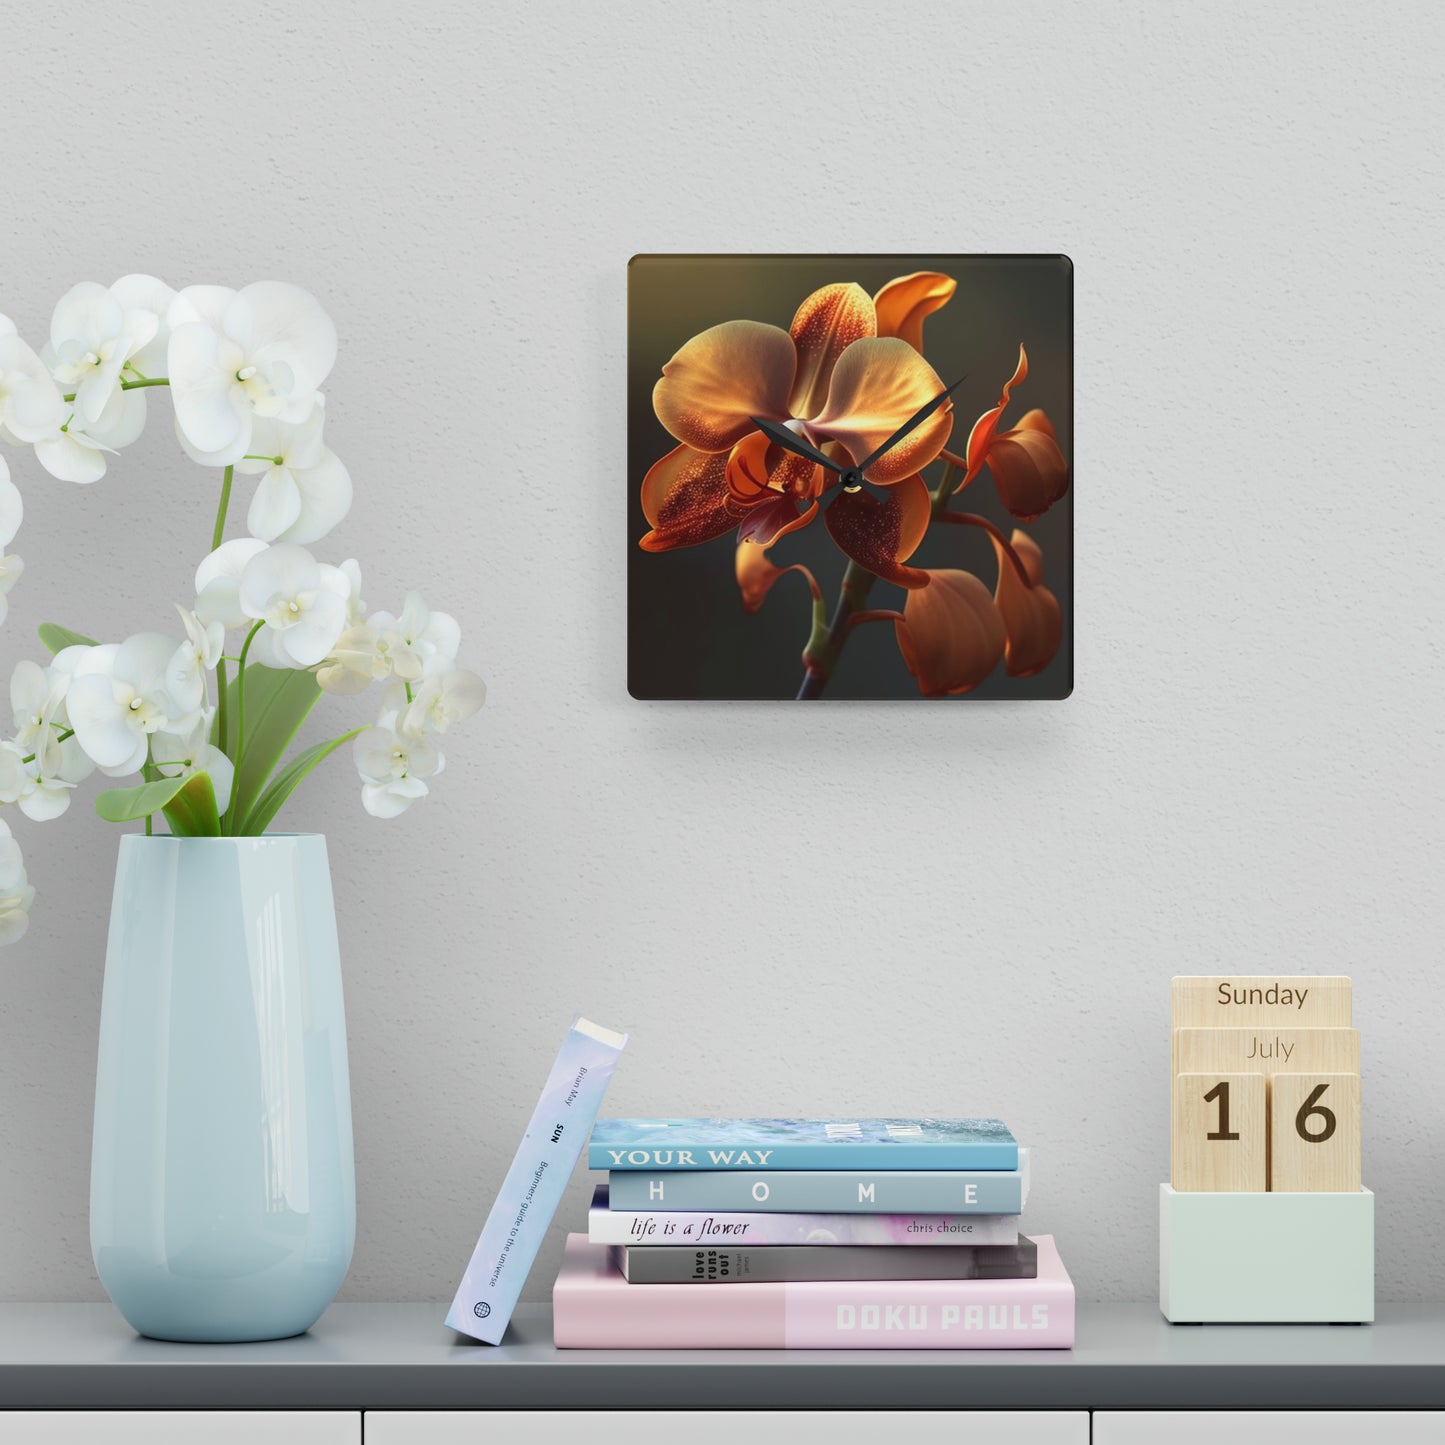 Acrylic Wall Clock Orange Orchid 1